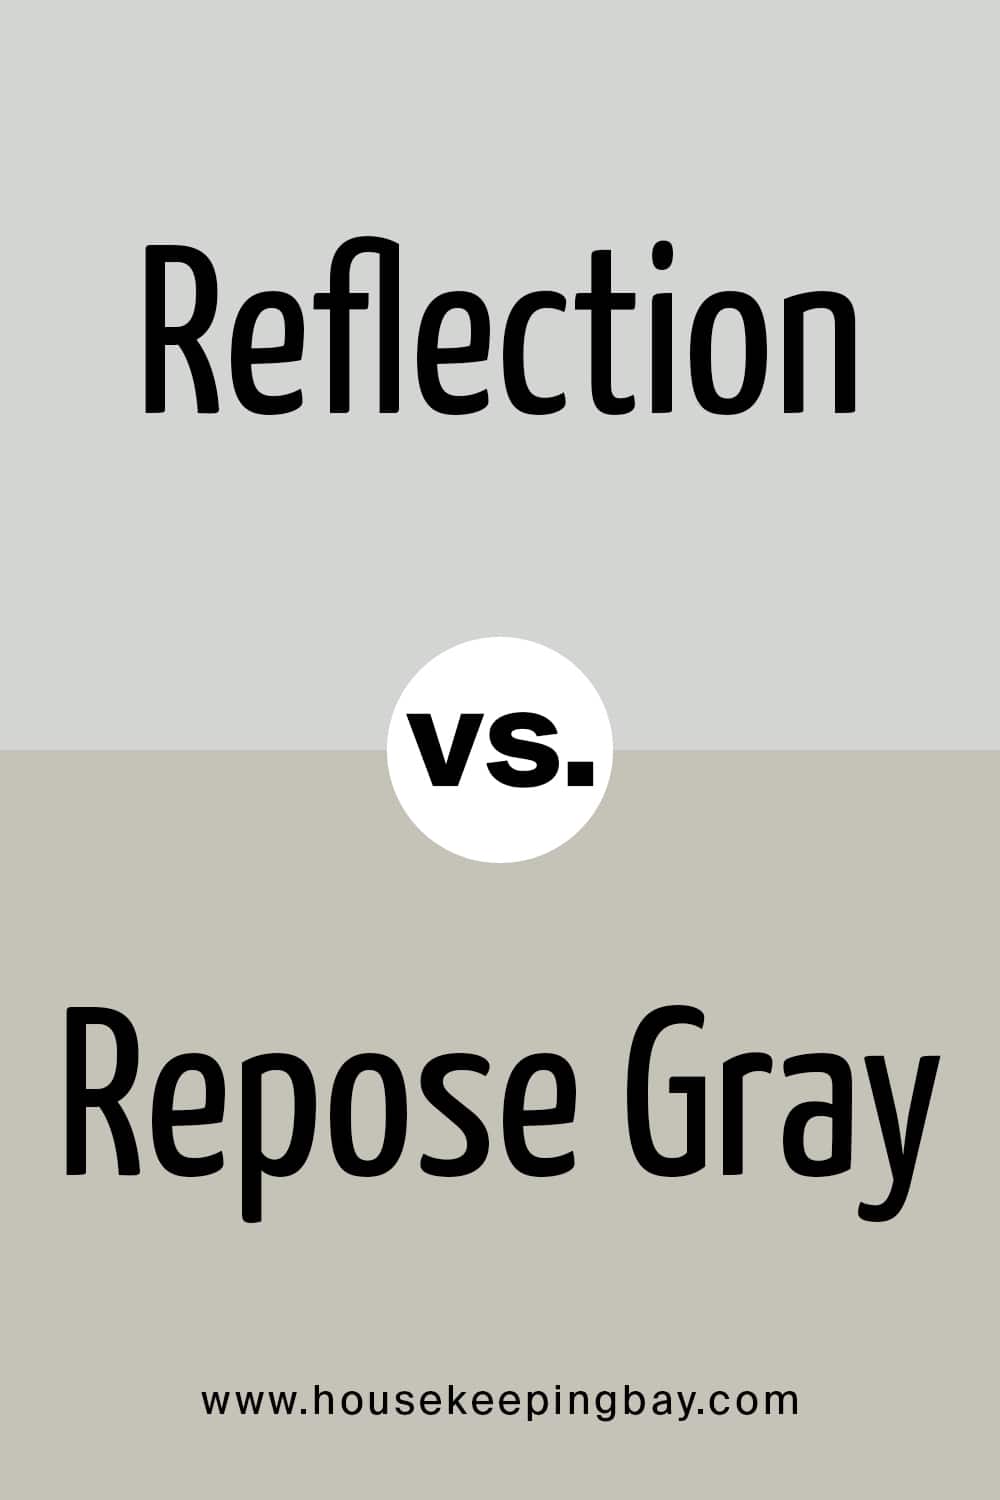 Reflection VS Repose Gray